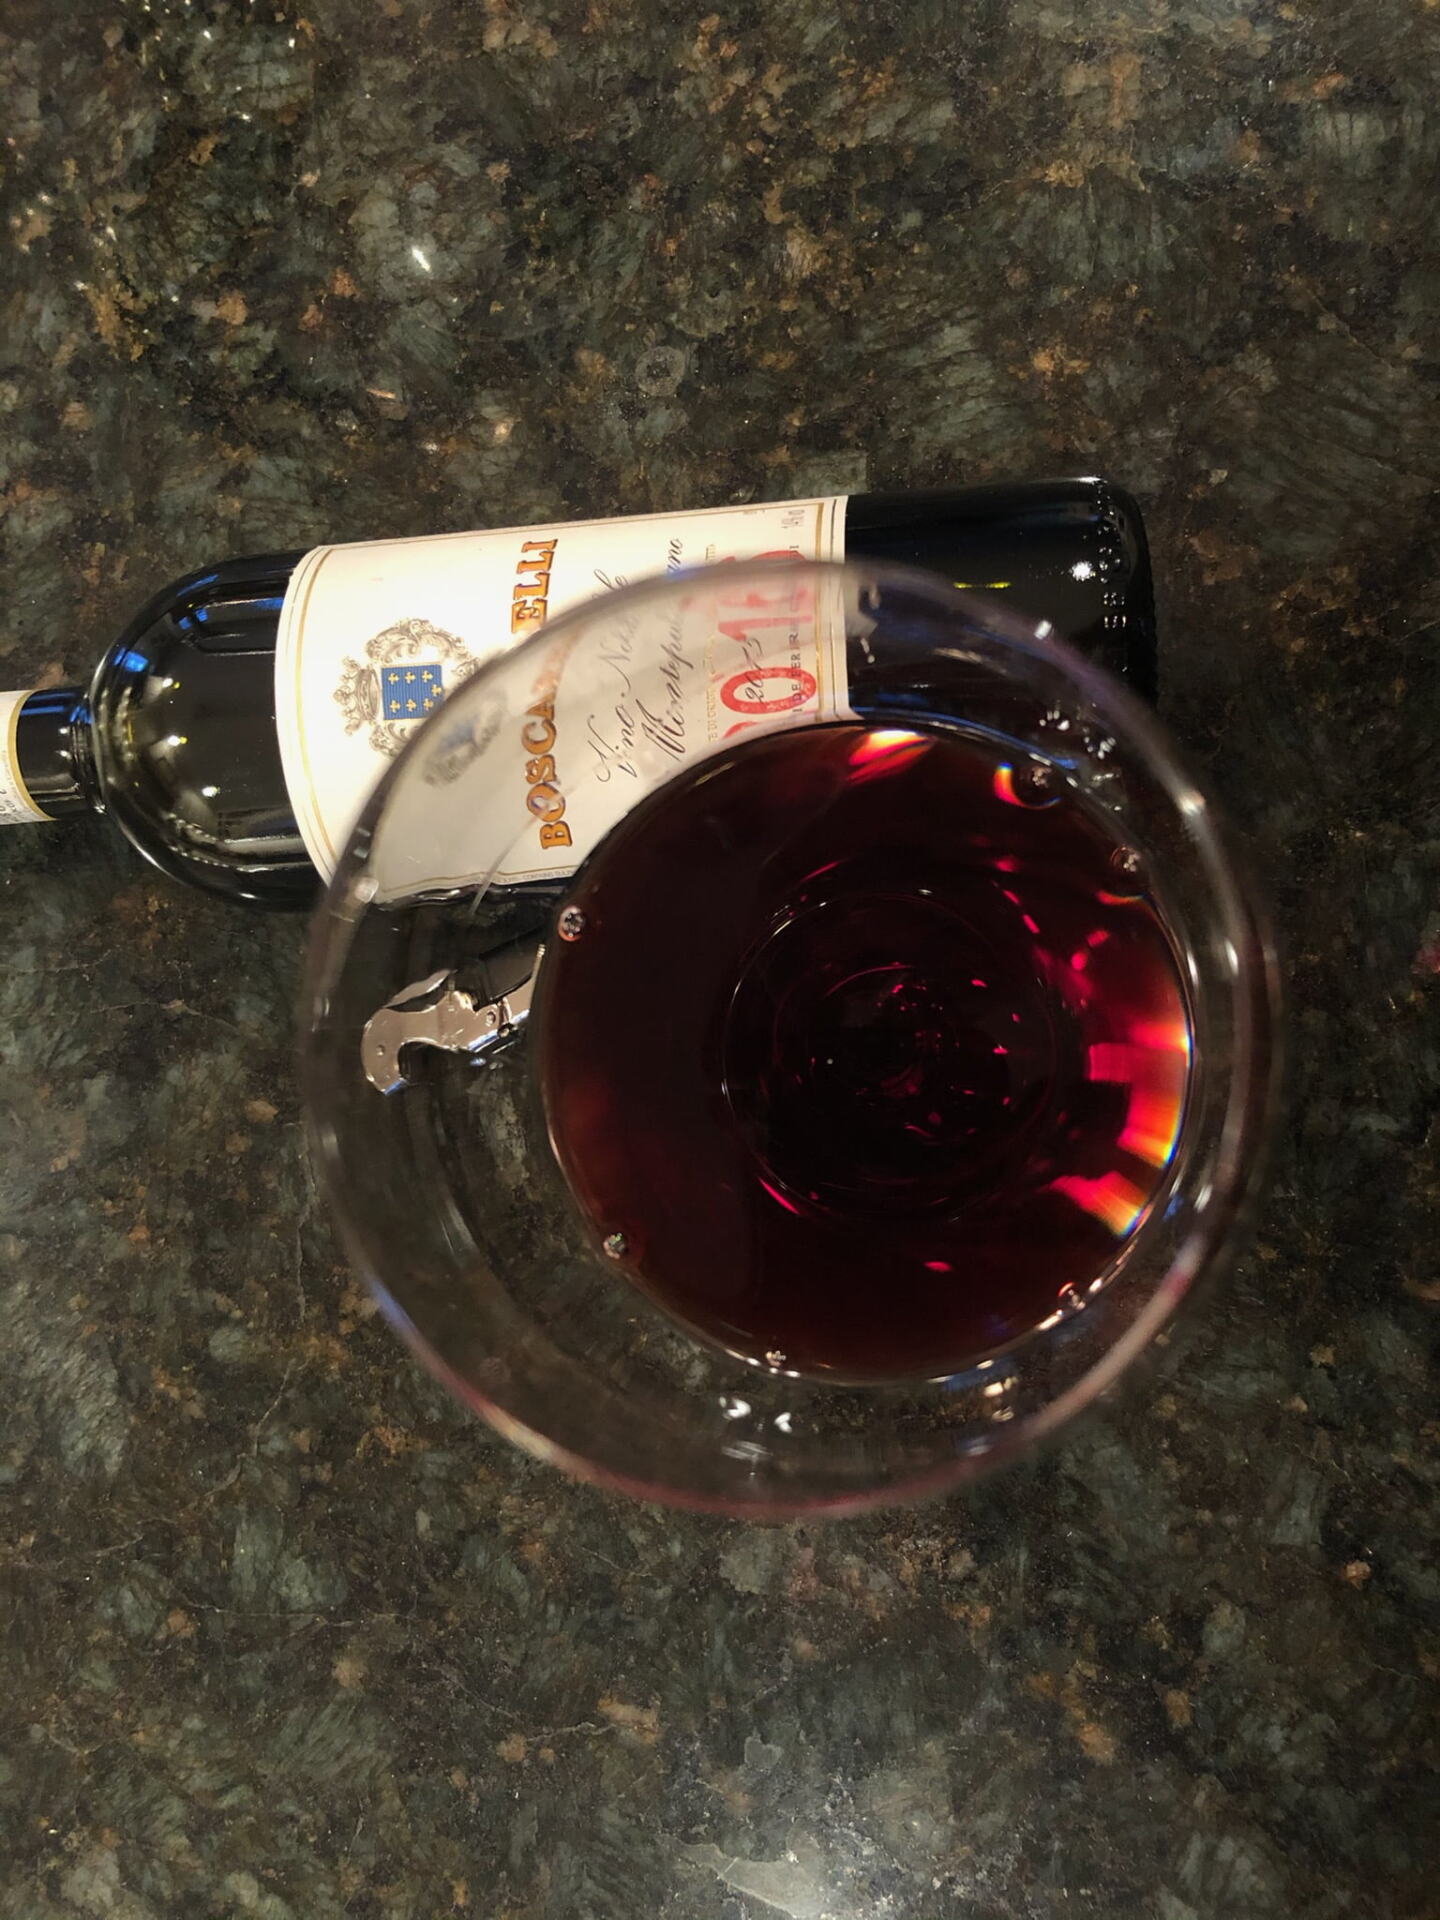 Wine in a glass